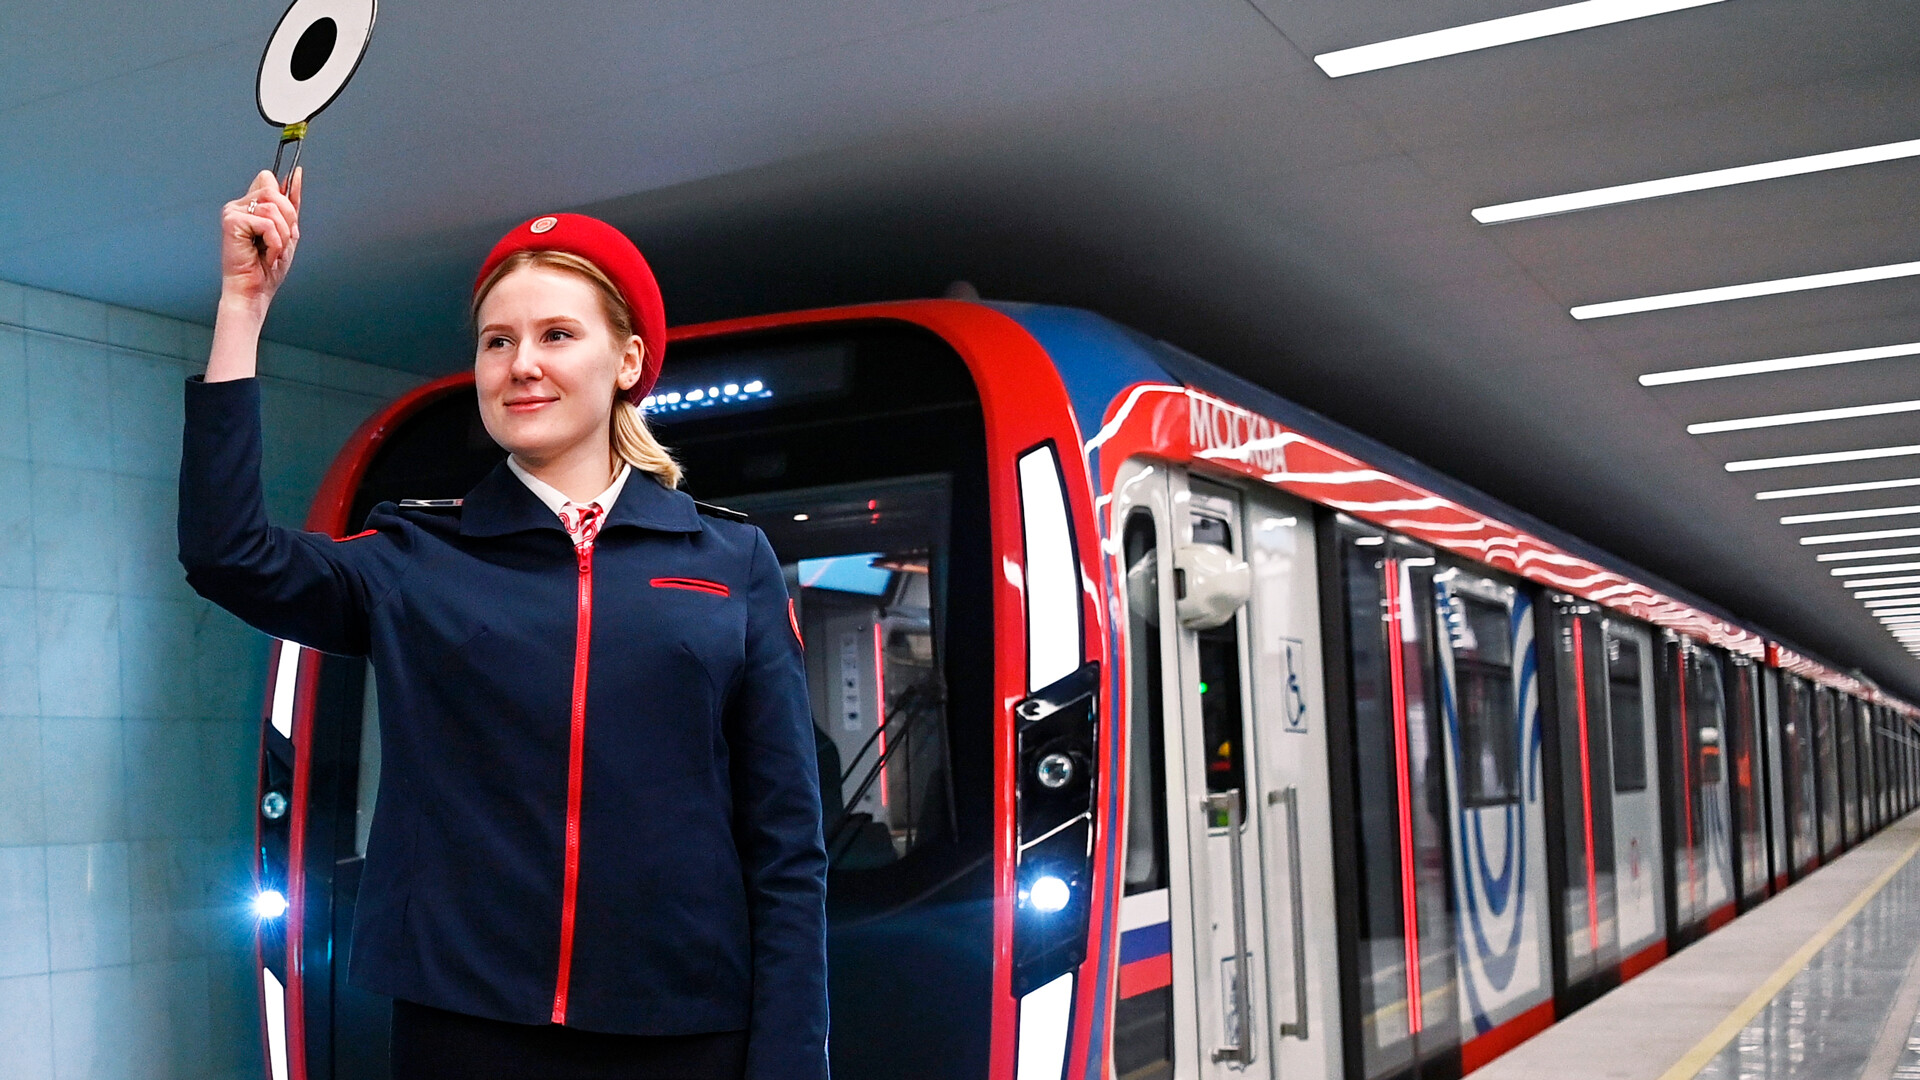 Delavka moskovske podzemne železnice na postaji "Kaširskaja" Kahovske linije metroja  